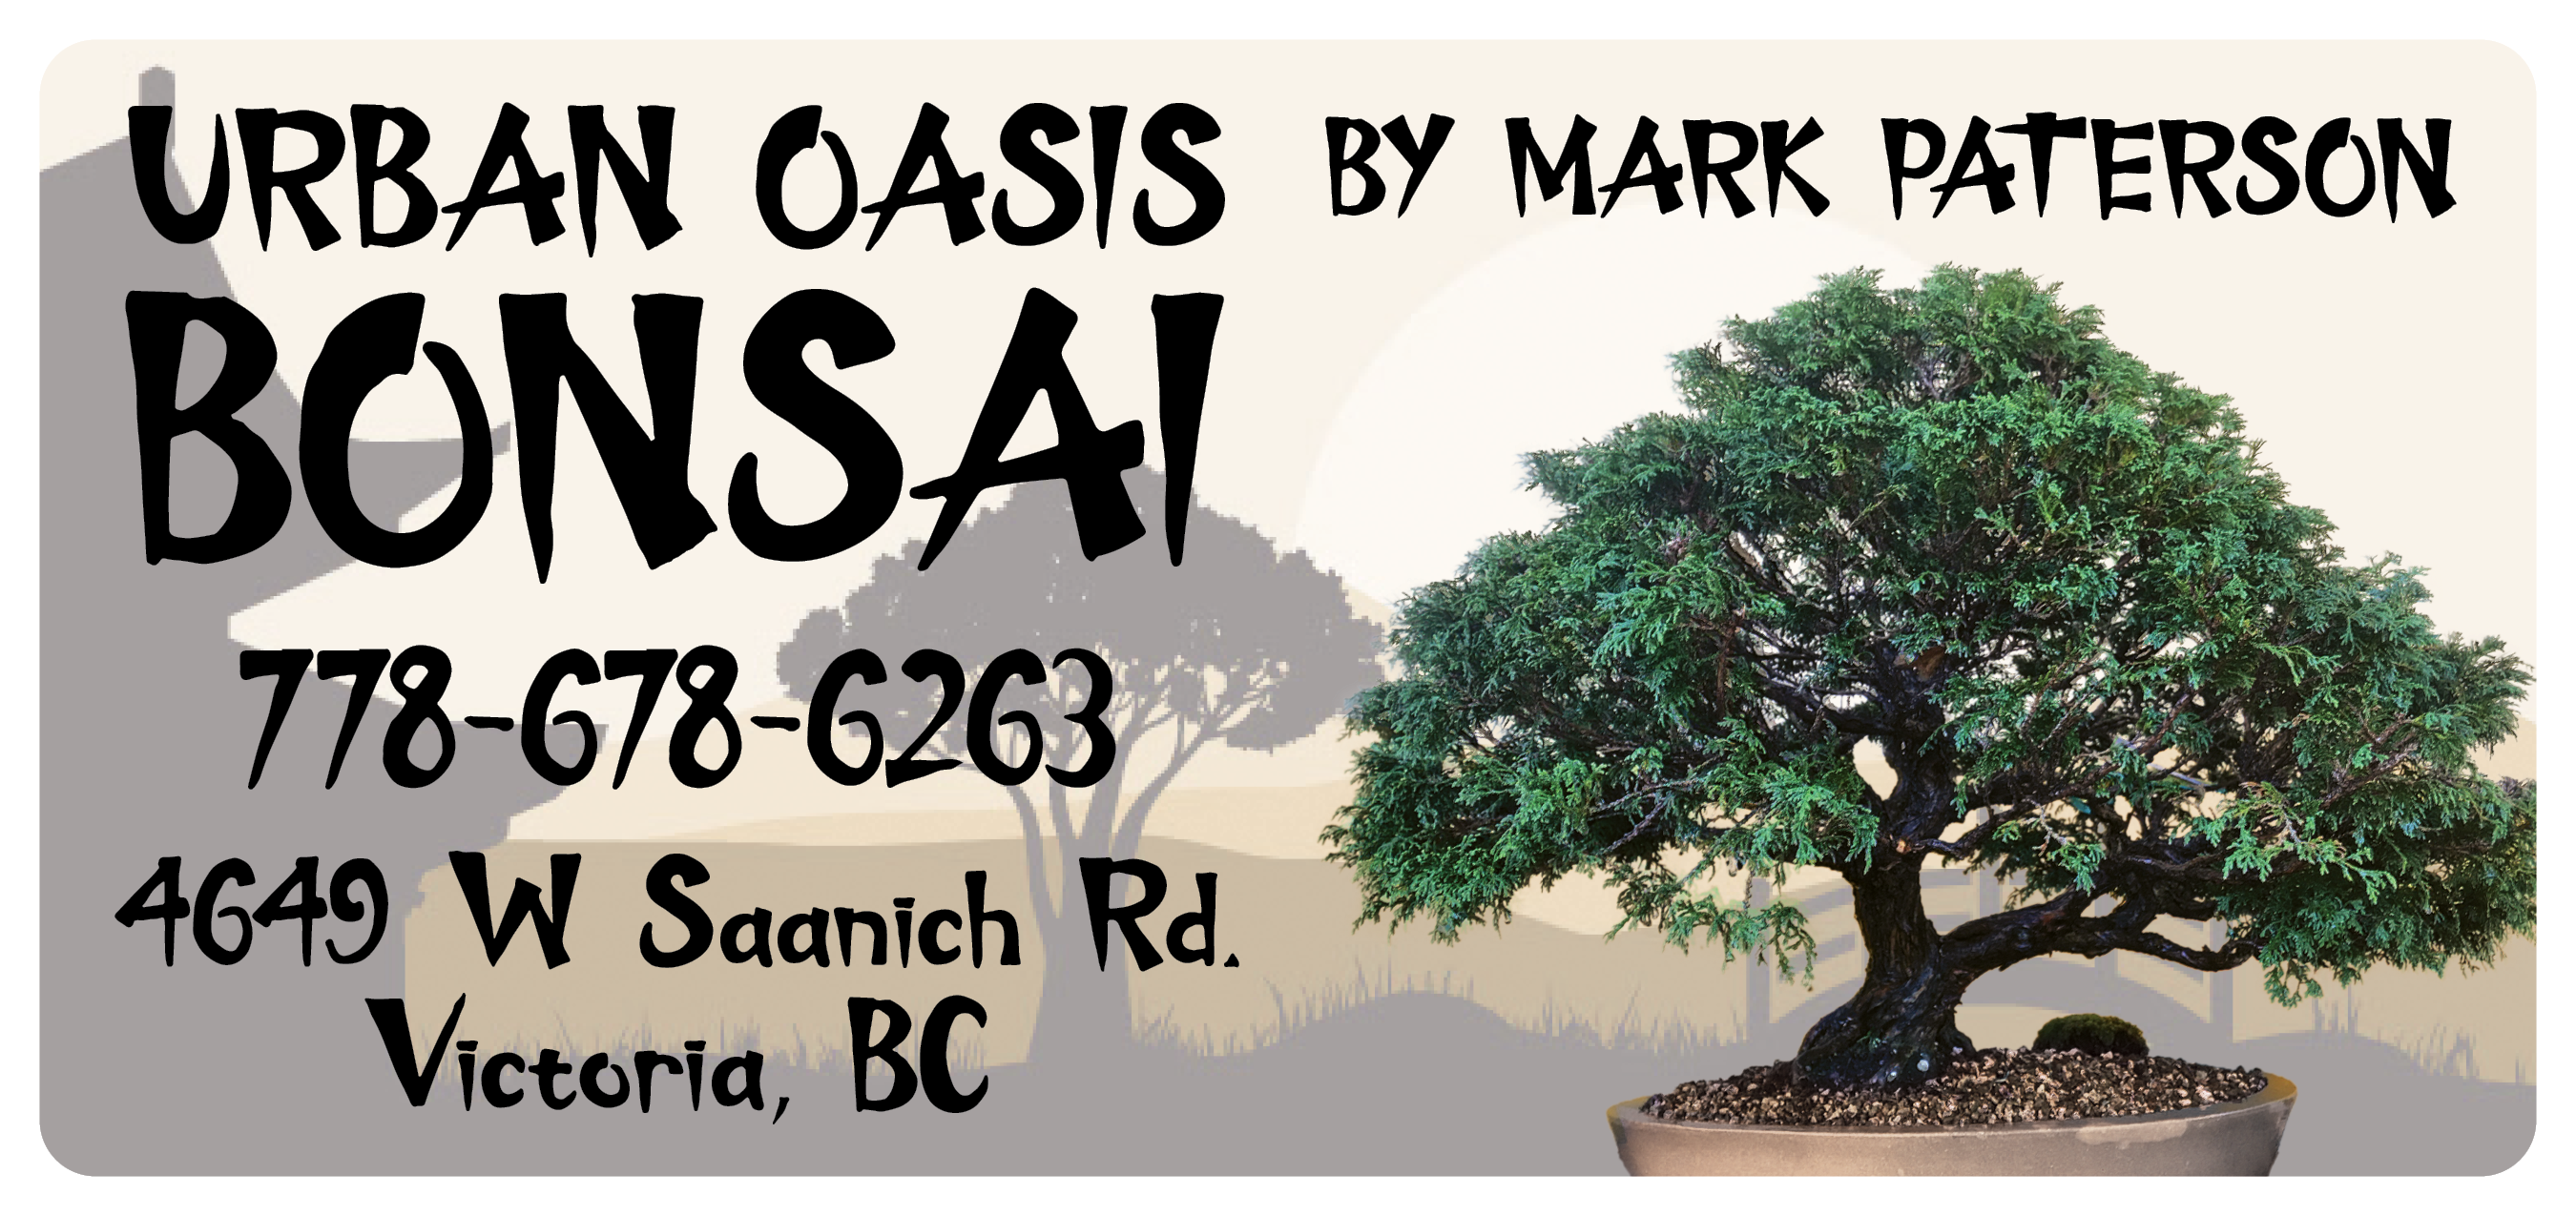 Urban Oasis Bonsai